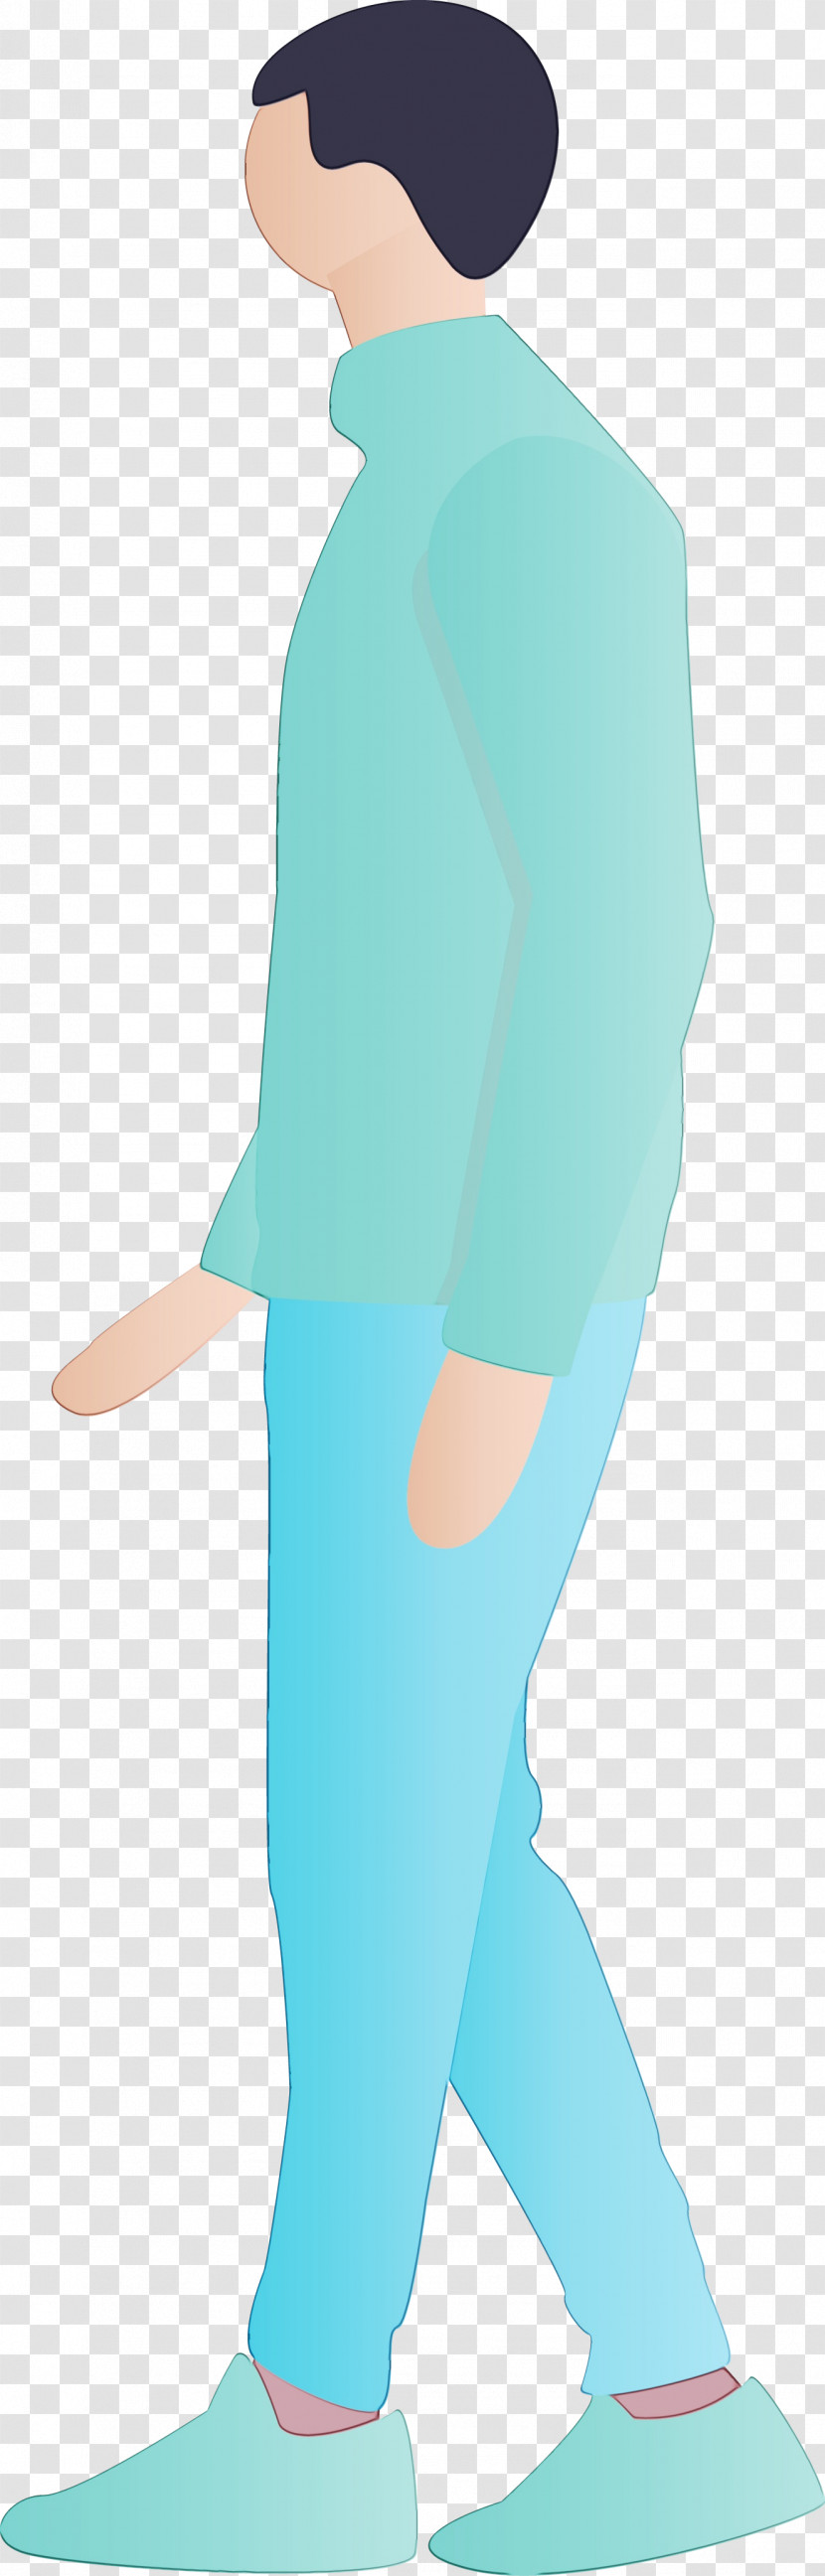 Turquoise Aqua Teal Footwear Human Leg Transparent PNG